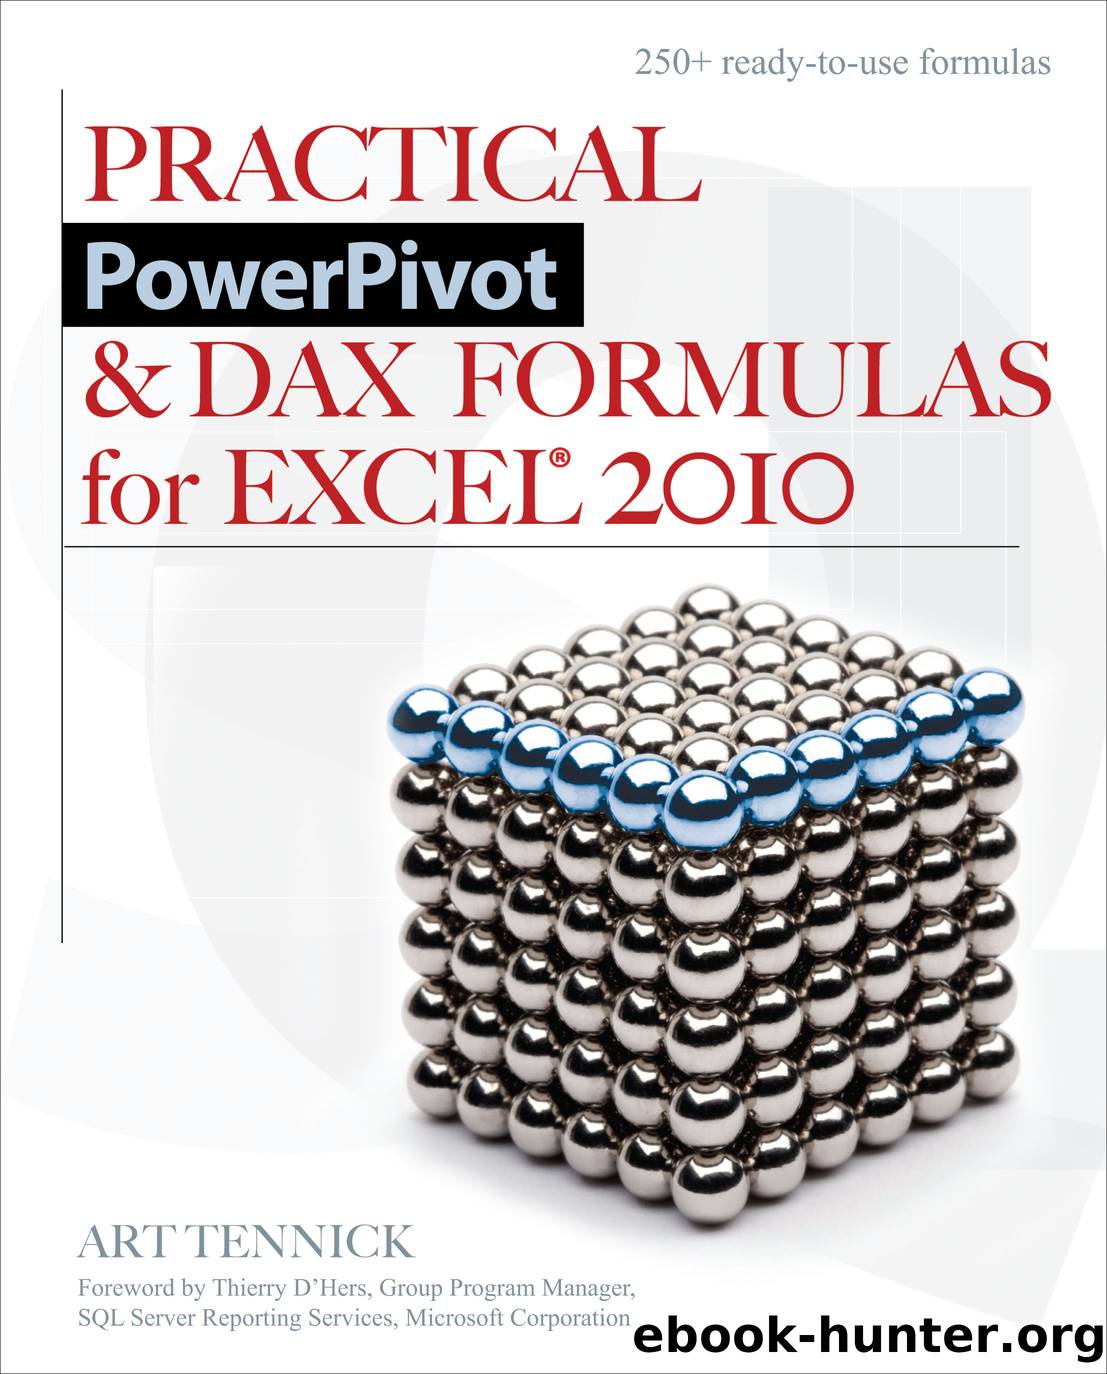 Practical PowerPivot DAX Formulas for Excel 2010 by Art Tennick